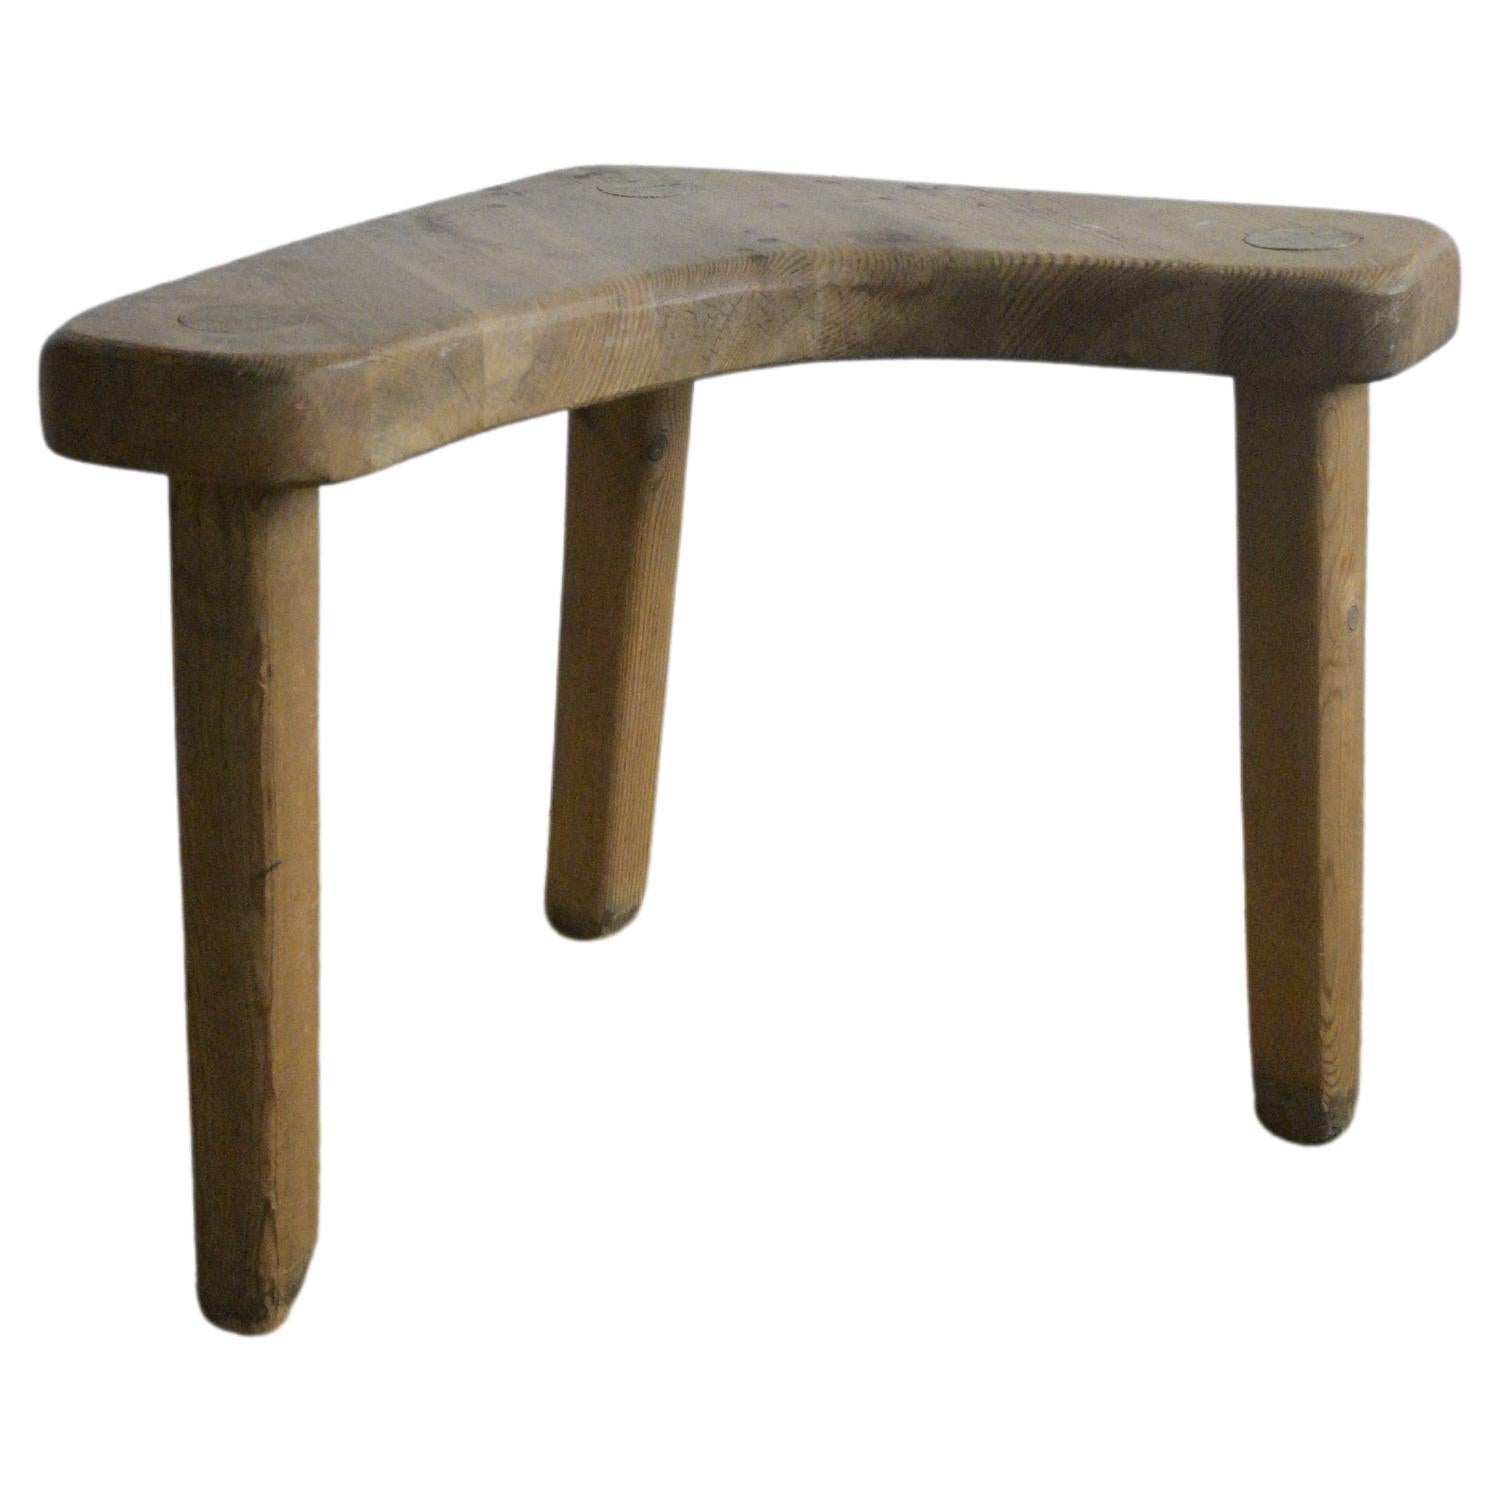 Unsymmetric Pine Stool or Side Table by Stig Sandqvist, Vemdalen, Sweden 1950s For Sale